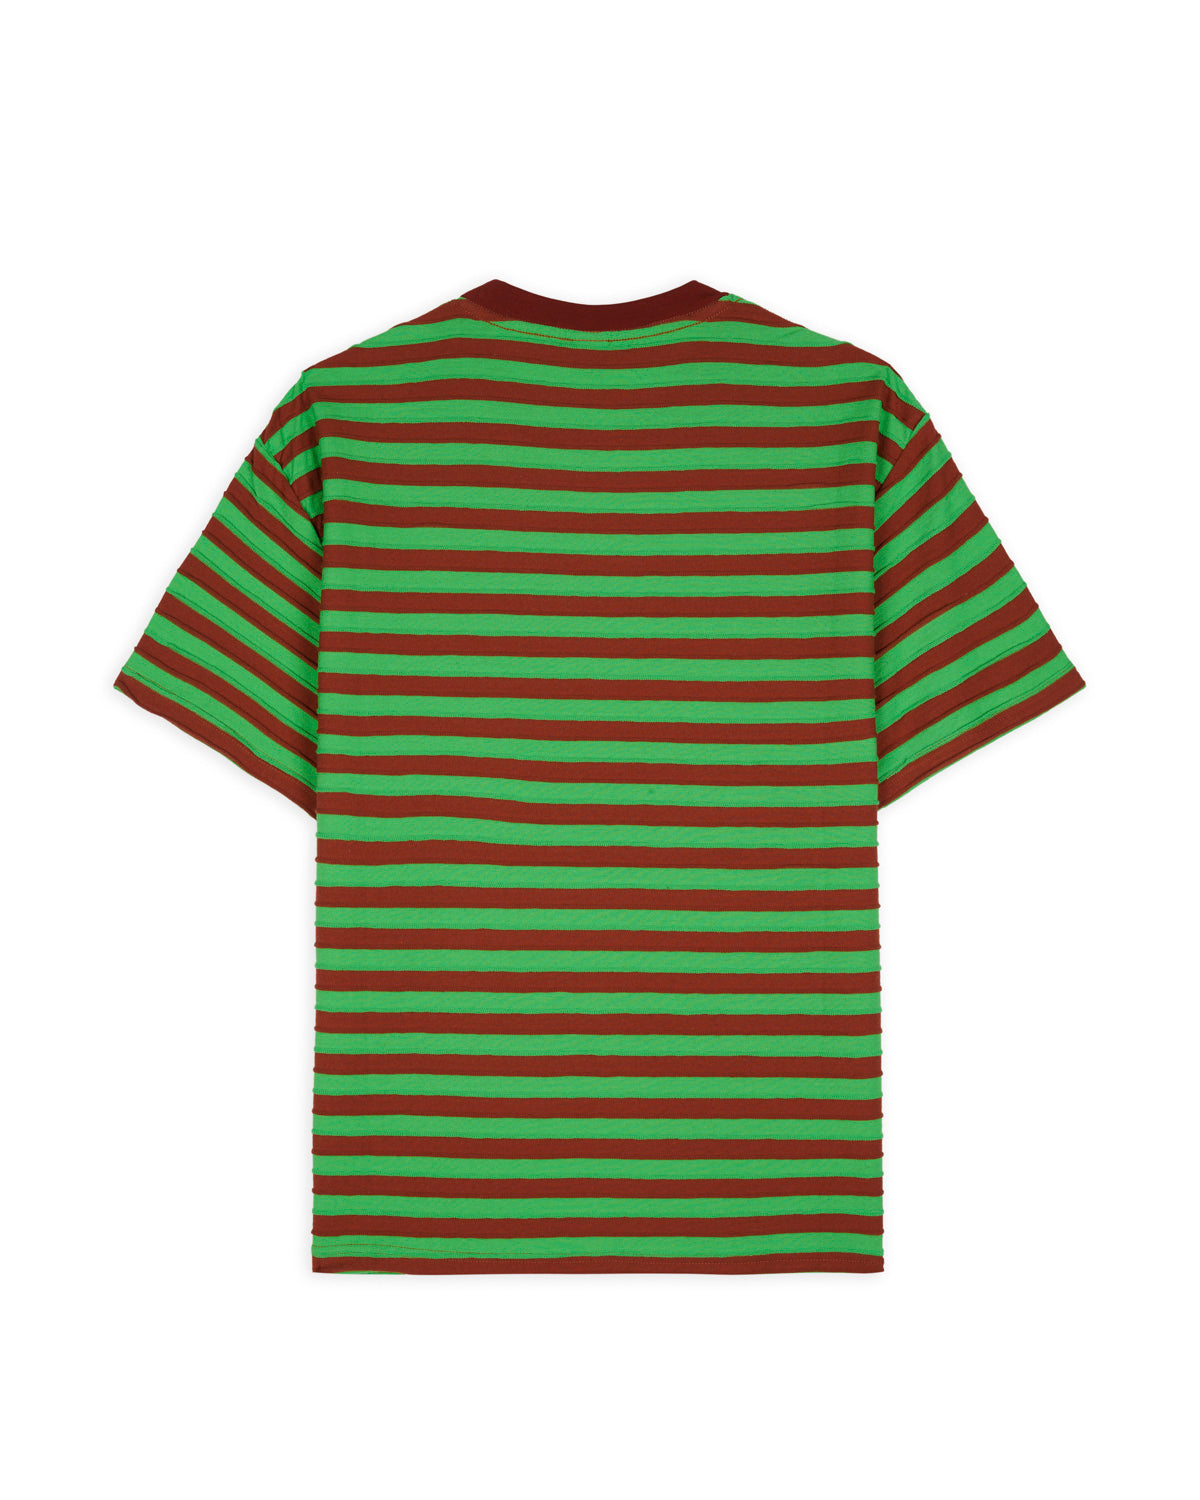 Denny Blaine Striped T-Shirt - Apple/Caramel – Brain Dead